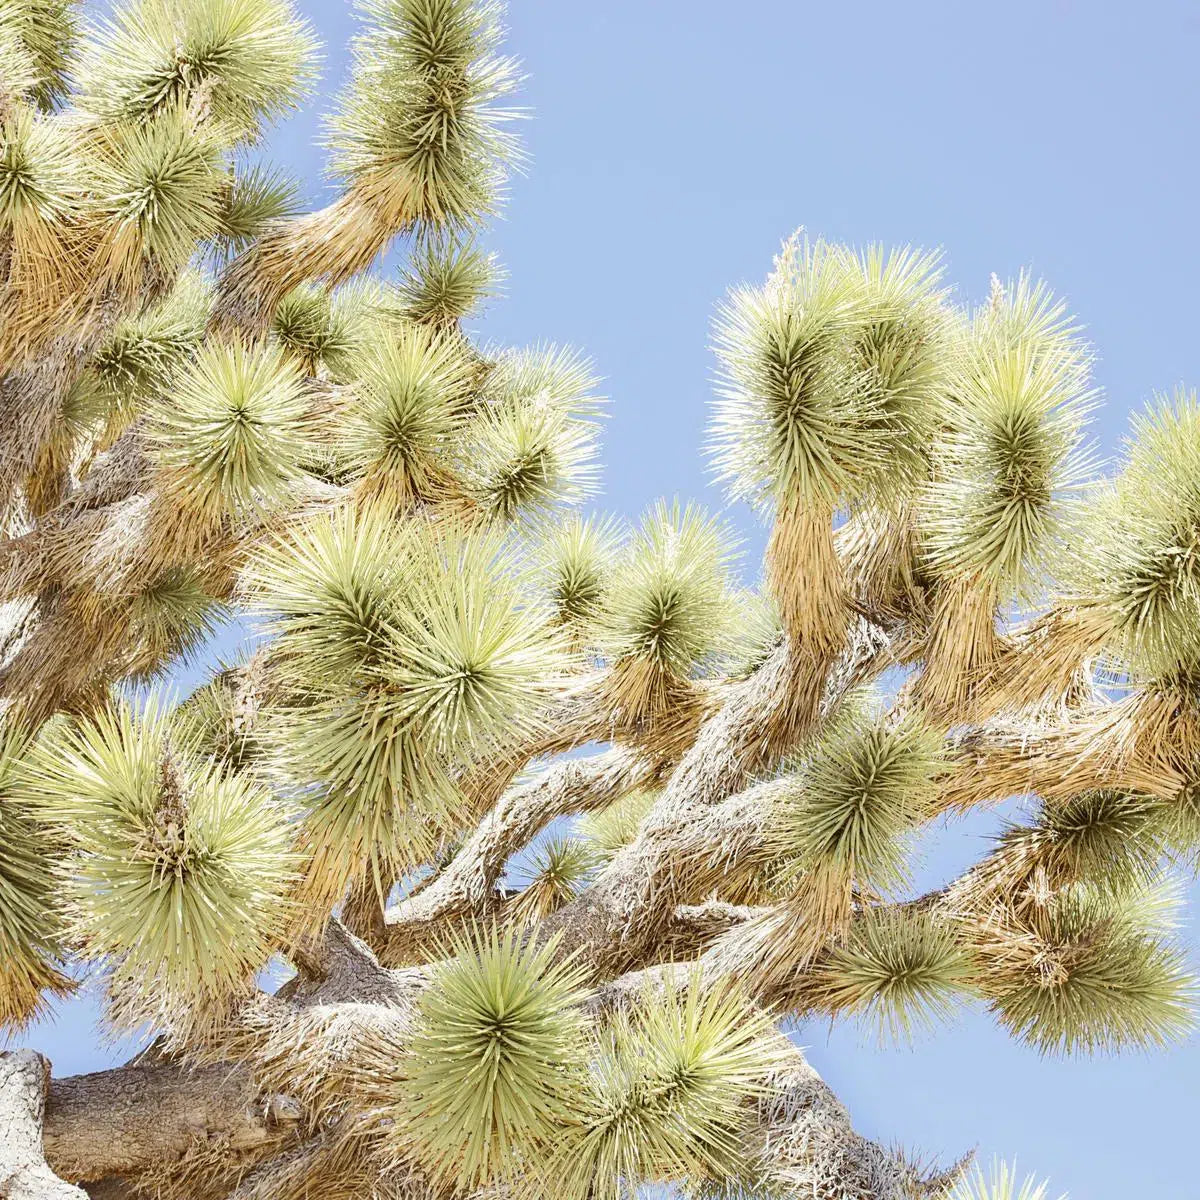 Cactus Sky #2, by Irene Suchocki-PurePhoto